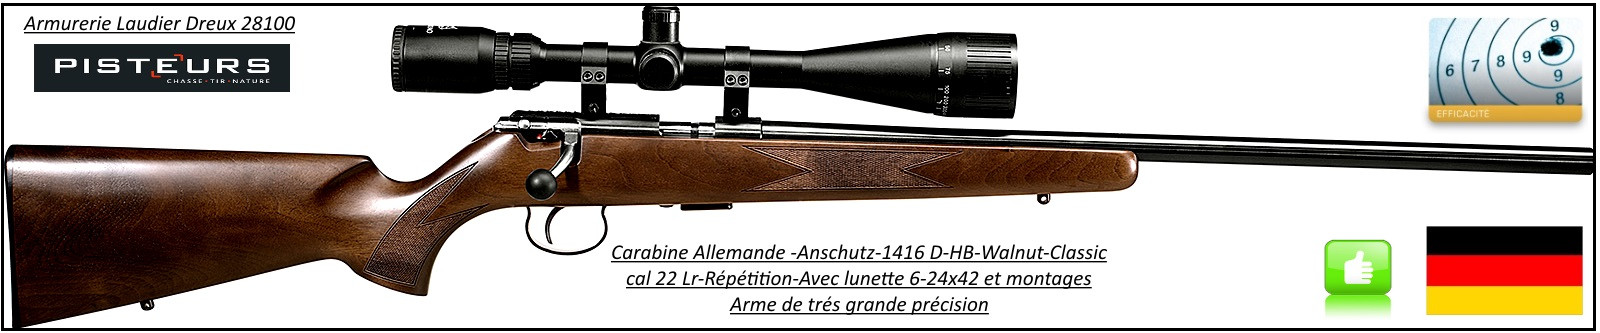 Carabine-ANSCHÜTZ-Mod-1416D- HB WALNUT CLASSIC-Cal 22LR- KIT lunette 6-24x42 AO- -"Promotion"-Ref 11223